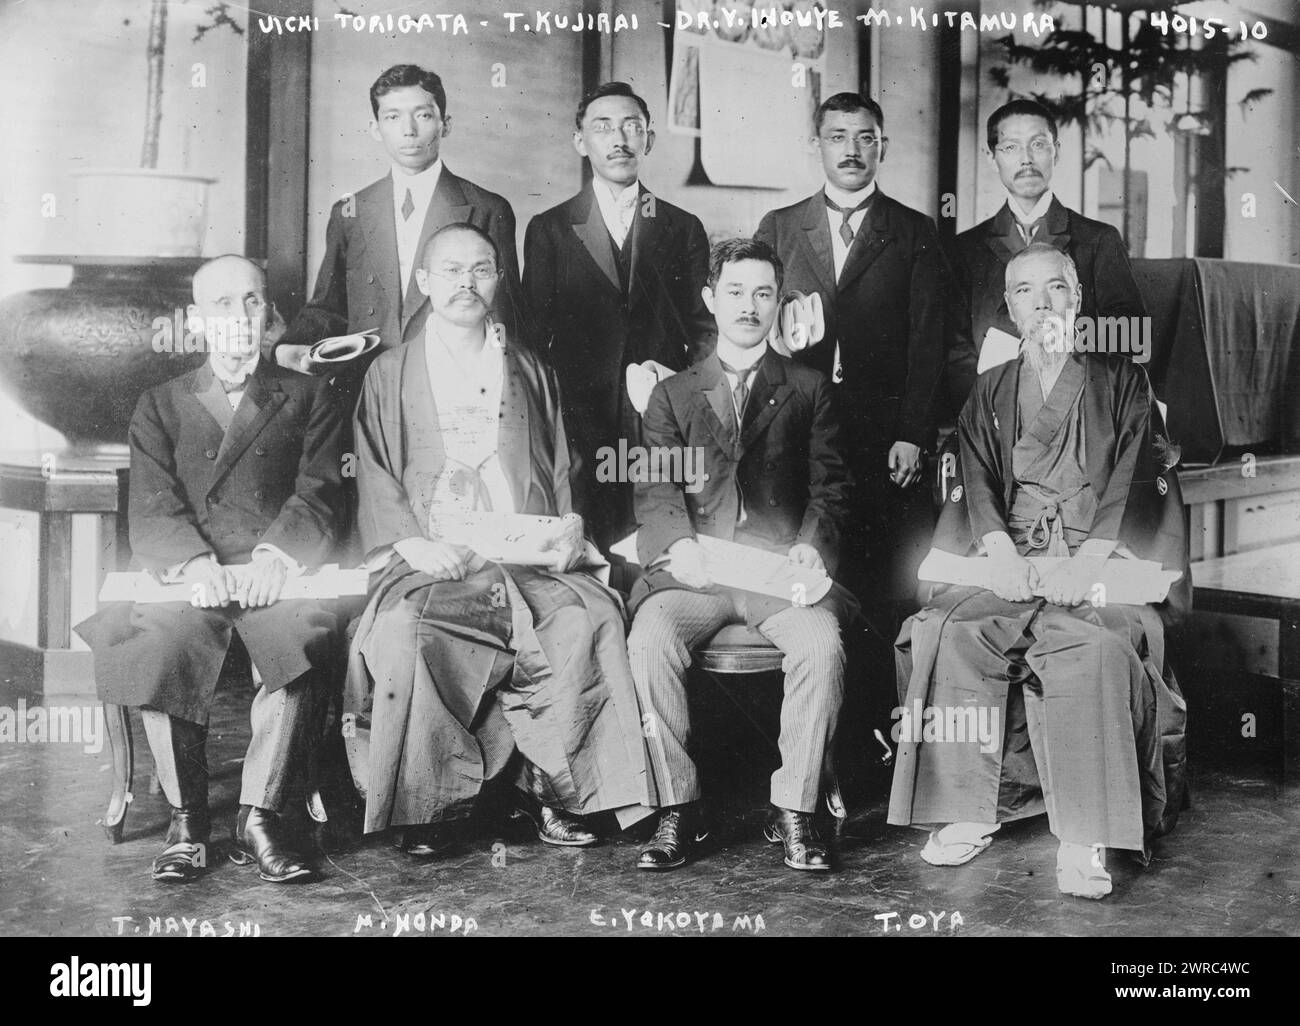 Uichi Torigata, T.Kujirai, Dr. Y. Inouye, M. Kitamura, T. Hayashi, M. Honda, E. Yakoyama, T. Oya, Photograph shows Wuichi Torigata, Tsunetoro Kujirai, Dr. Yoshiyuki Inouye?, Masajiro Kitamura, Taisuke Hayashi, Kotaro Honda, Eitaro Yakoyama and Toru Oya, all winners of the Imperial Japan Academy Prize in July 1916., between ca. 1915 and ca. 1920, Glass negatives, 1 negative: glass Stock Photo